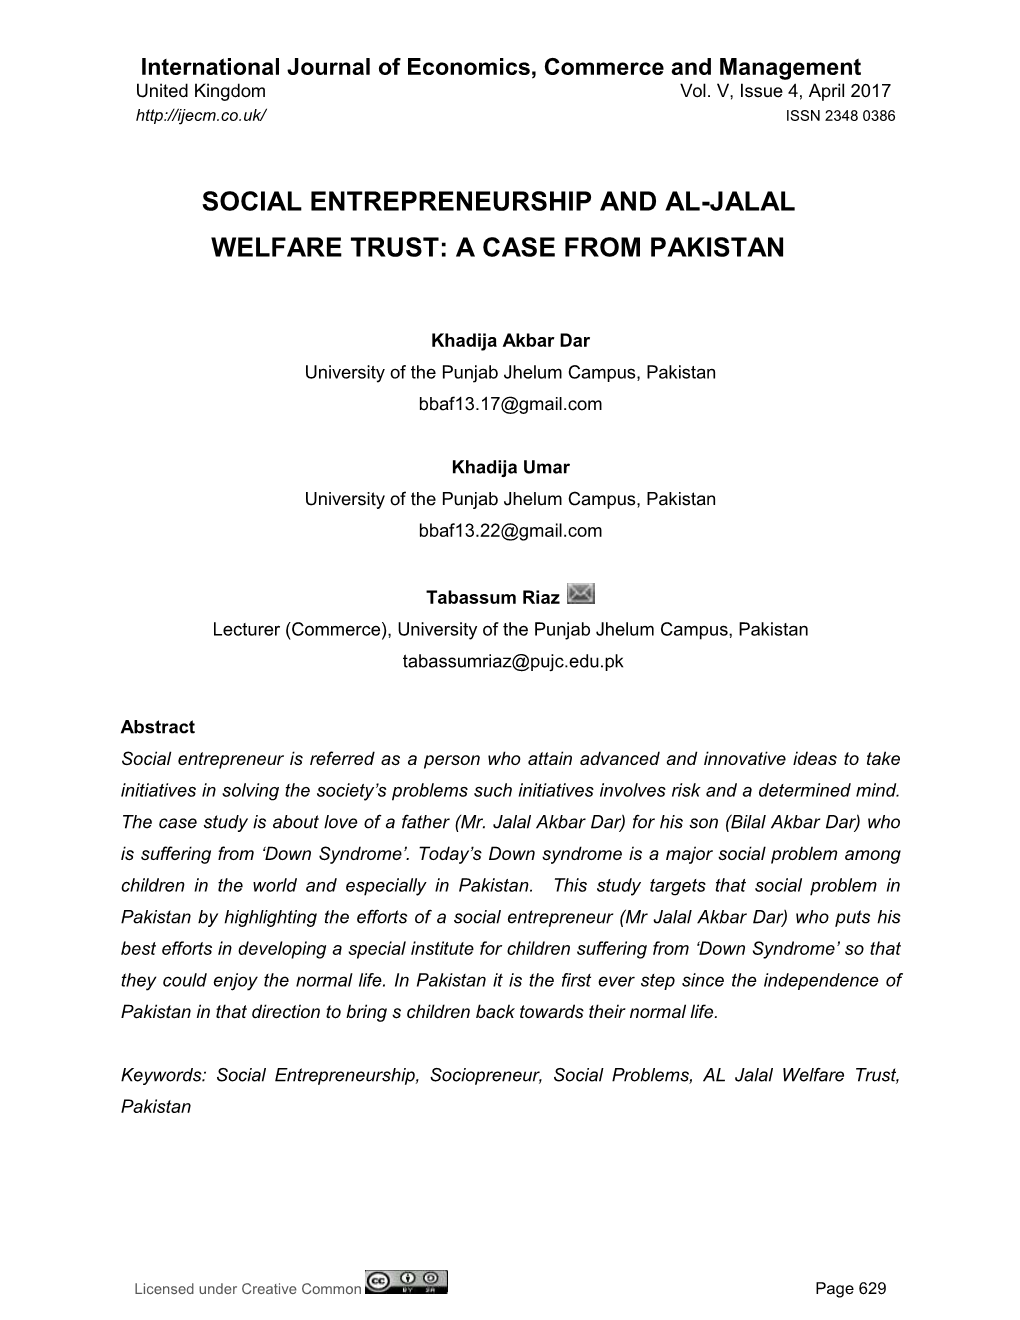 Social Entrepreneurship and Al-Jalal Welfare Trust: a Case from Pakistan